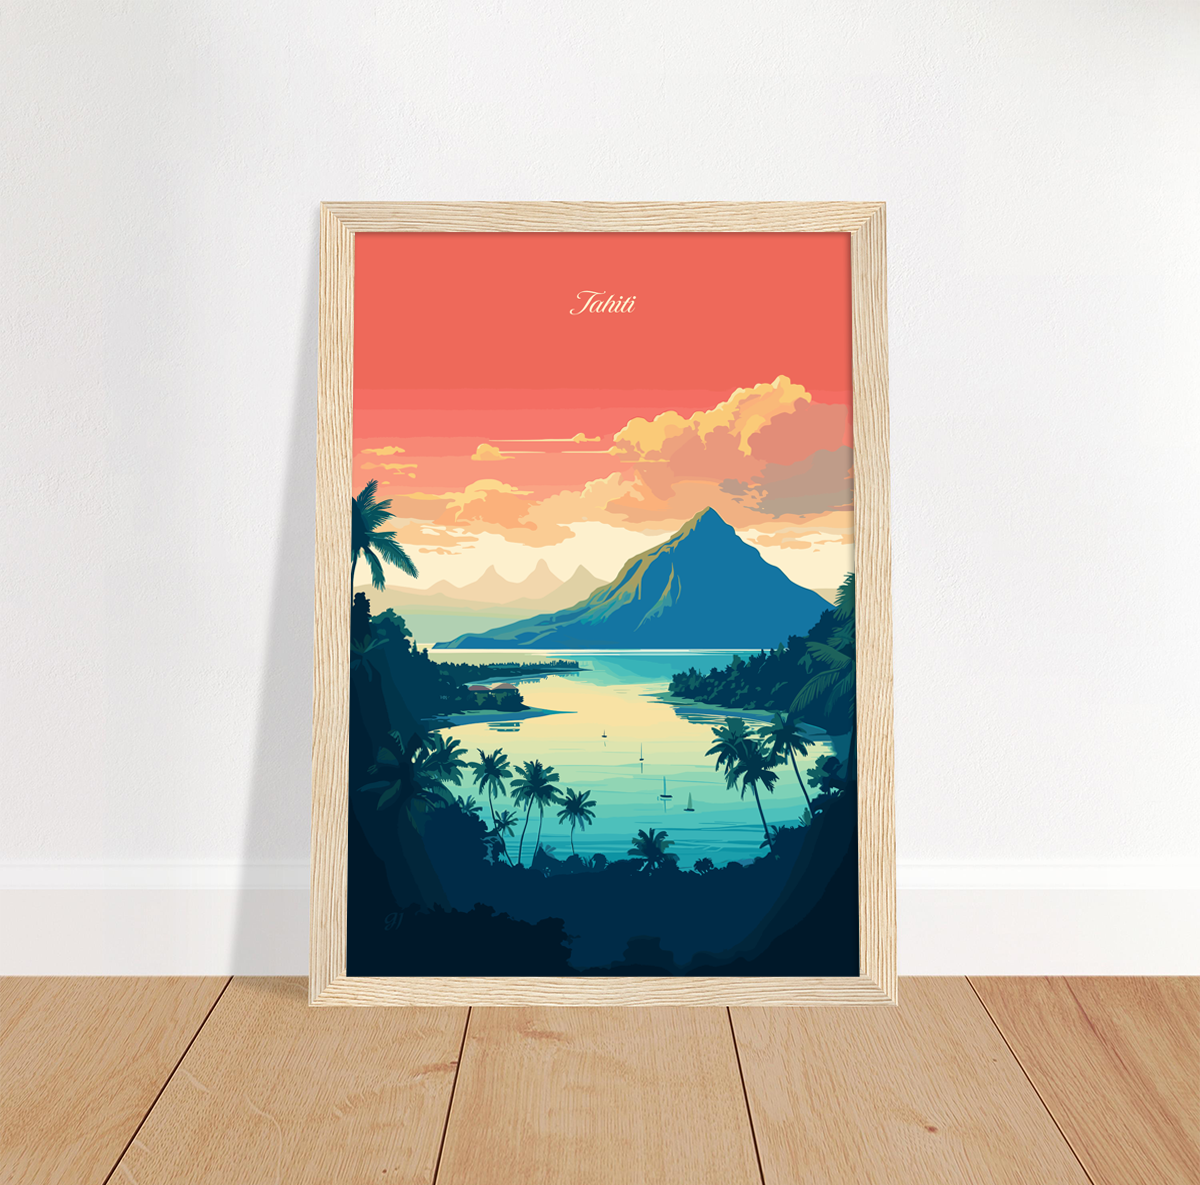 Tahiti poster by bon voyage design